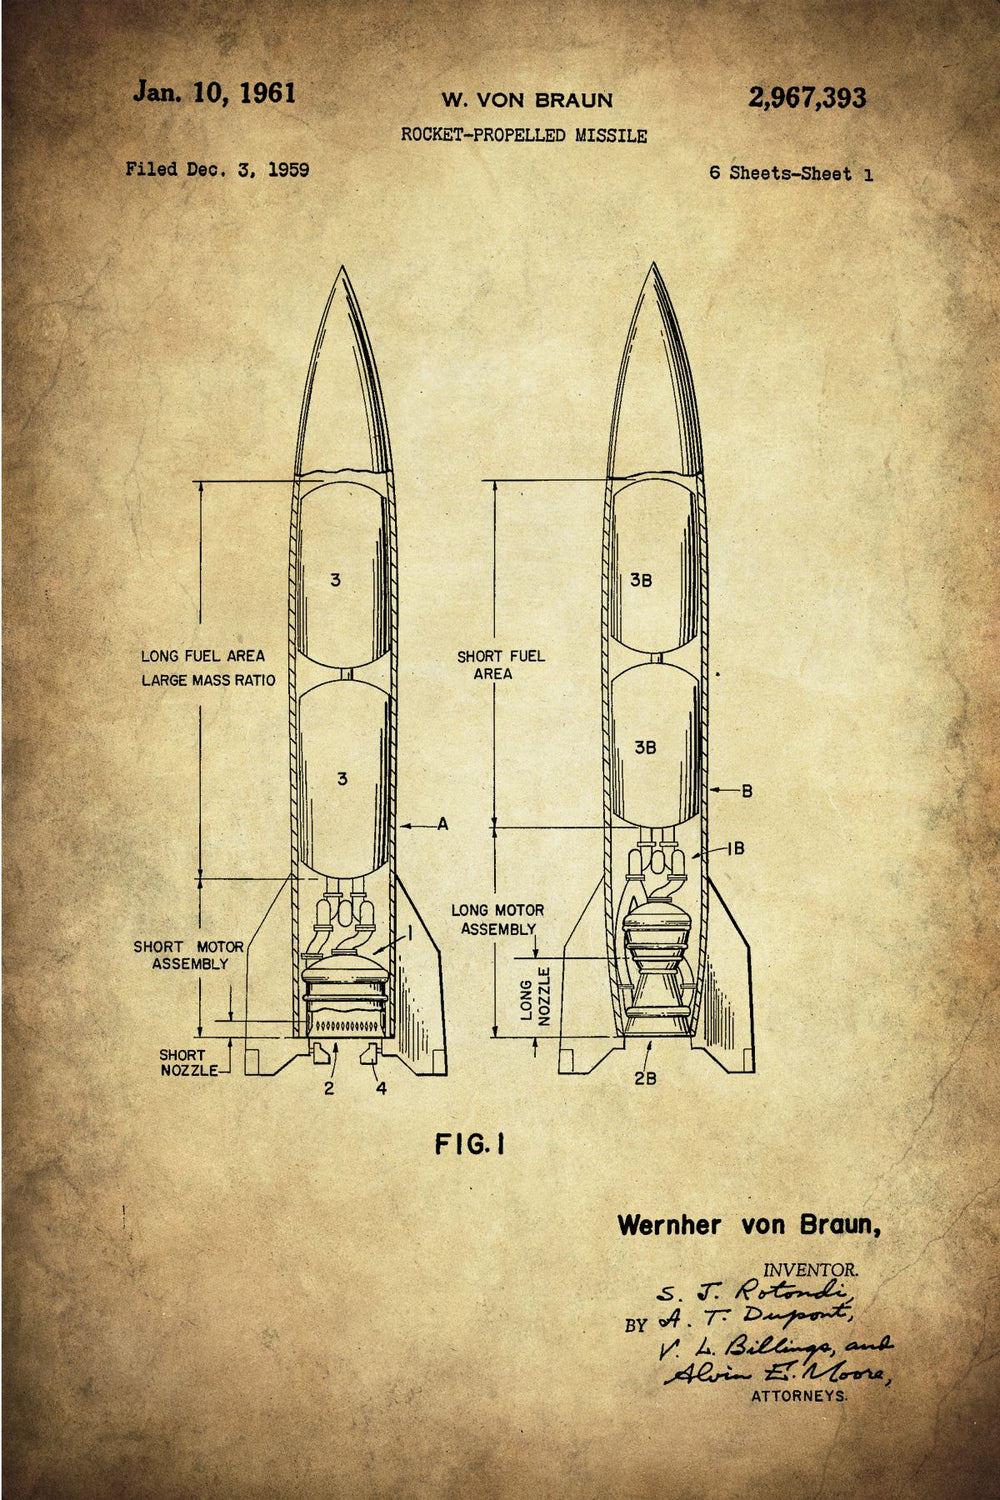 Rocket Propelled Missile Patent